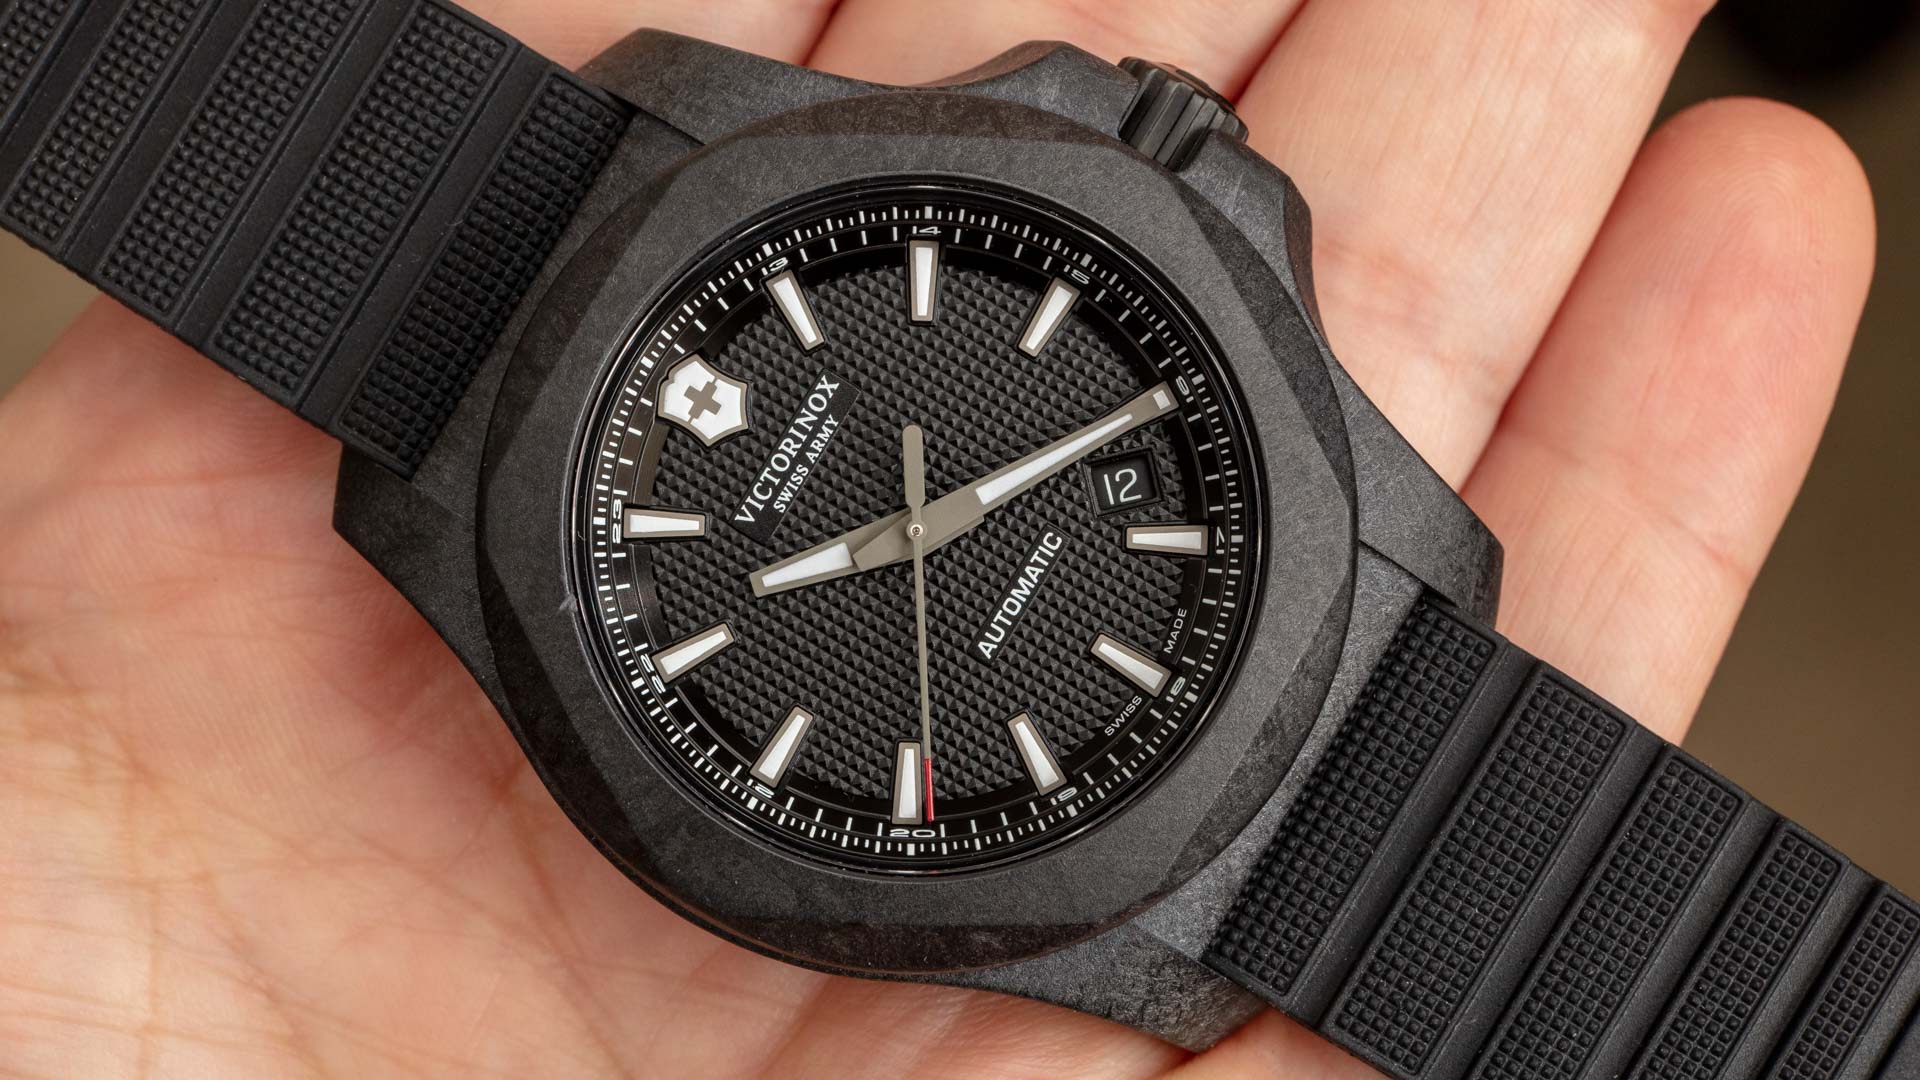 Victorinox INOX Carbon Mechanical Watch Hands-On